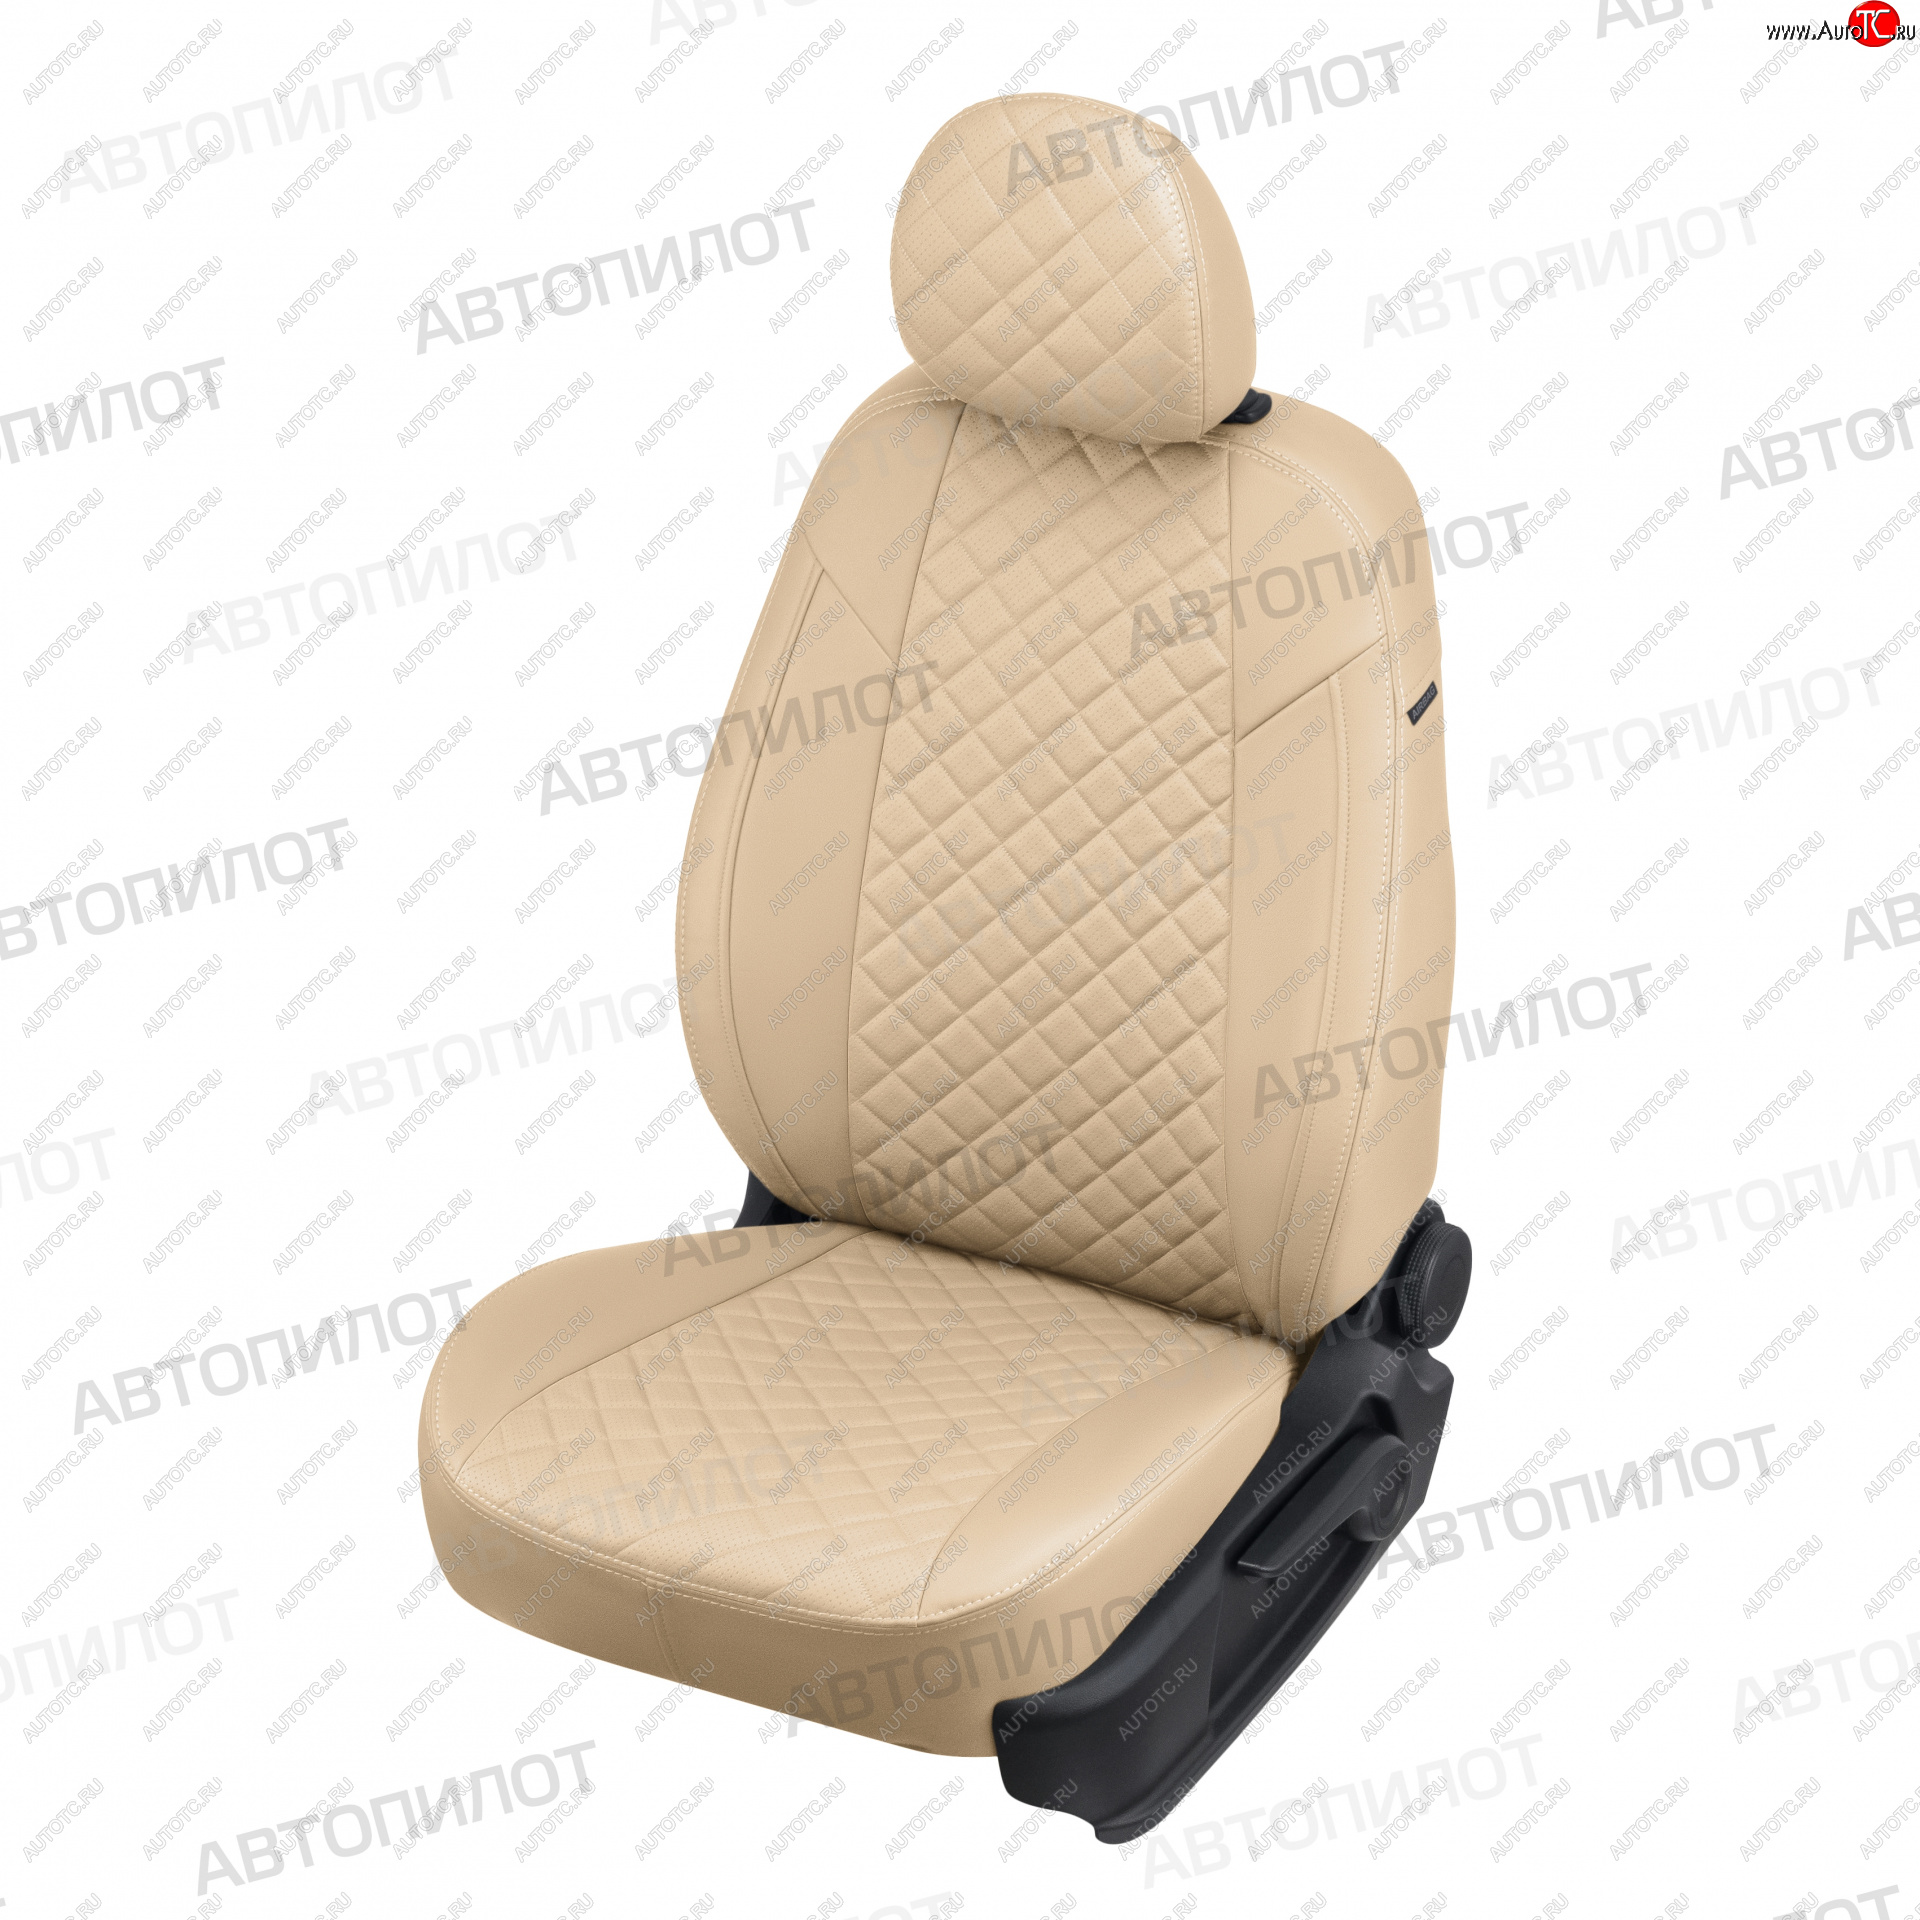 13 999 р. Чехлы сидений (экокожа) Автопилот Ромб  Honda CR-V  RD4,RD5,RD6,RD7,RD9  (2001-2006) (бежевый)